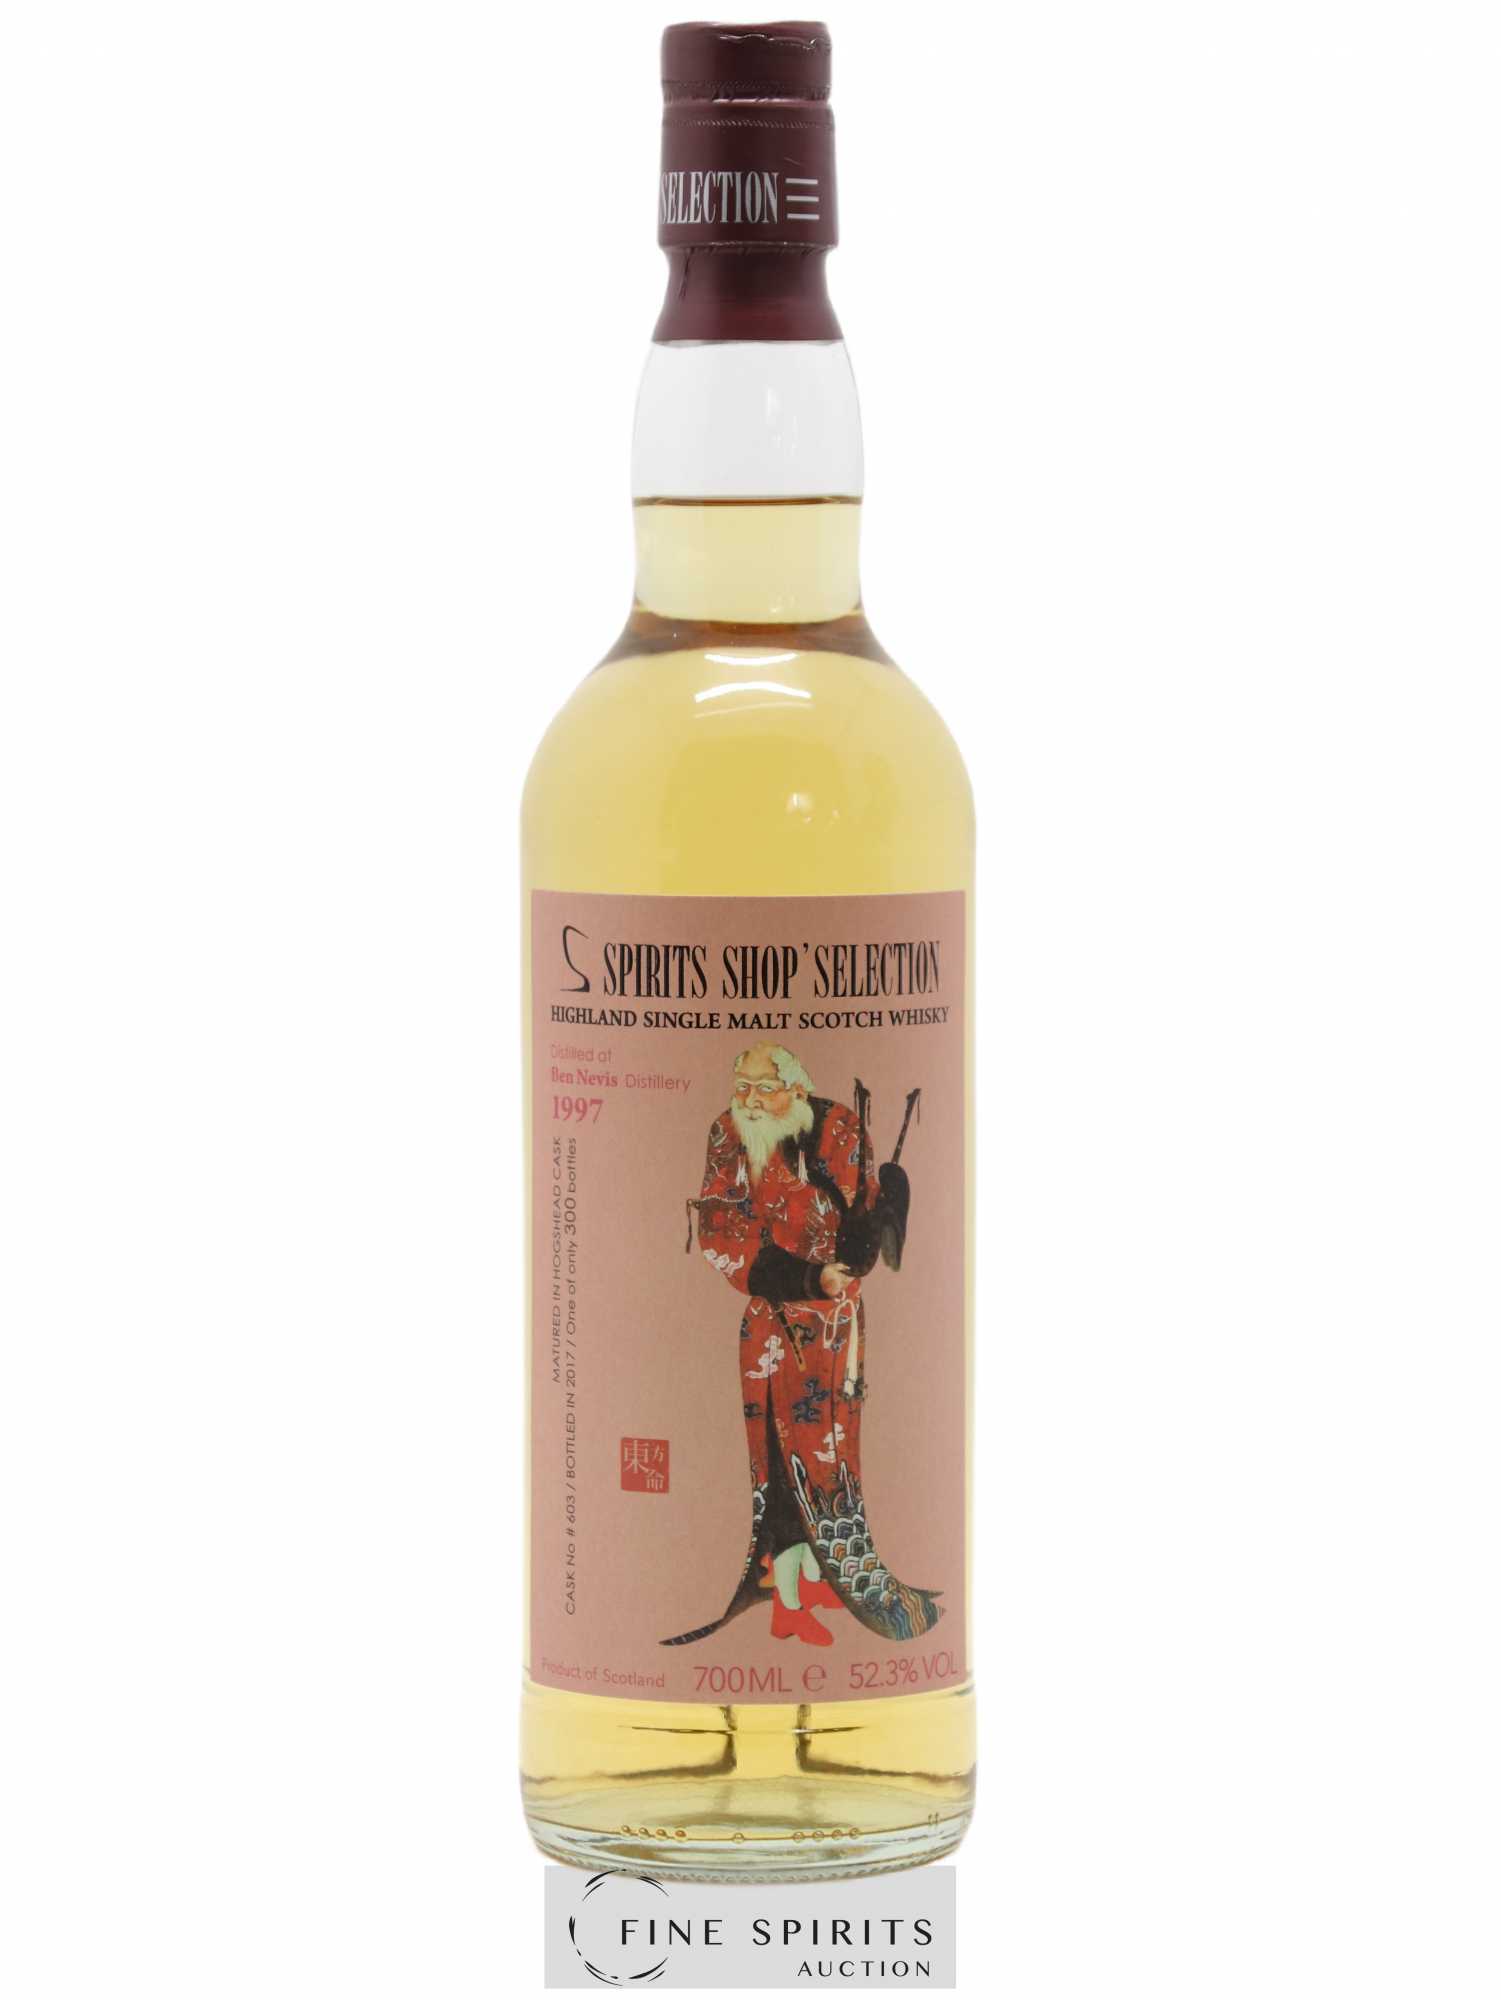 Ben Nevis 1997 Spirits Shop'Selection Hogshead Cask n°603 - One of 300 - bottled 2017 